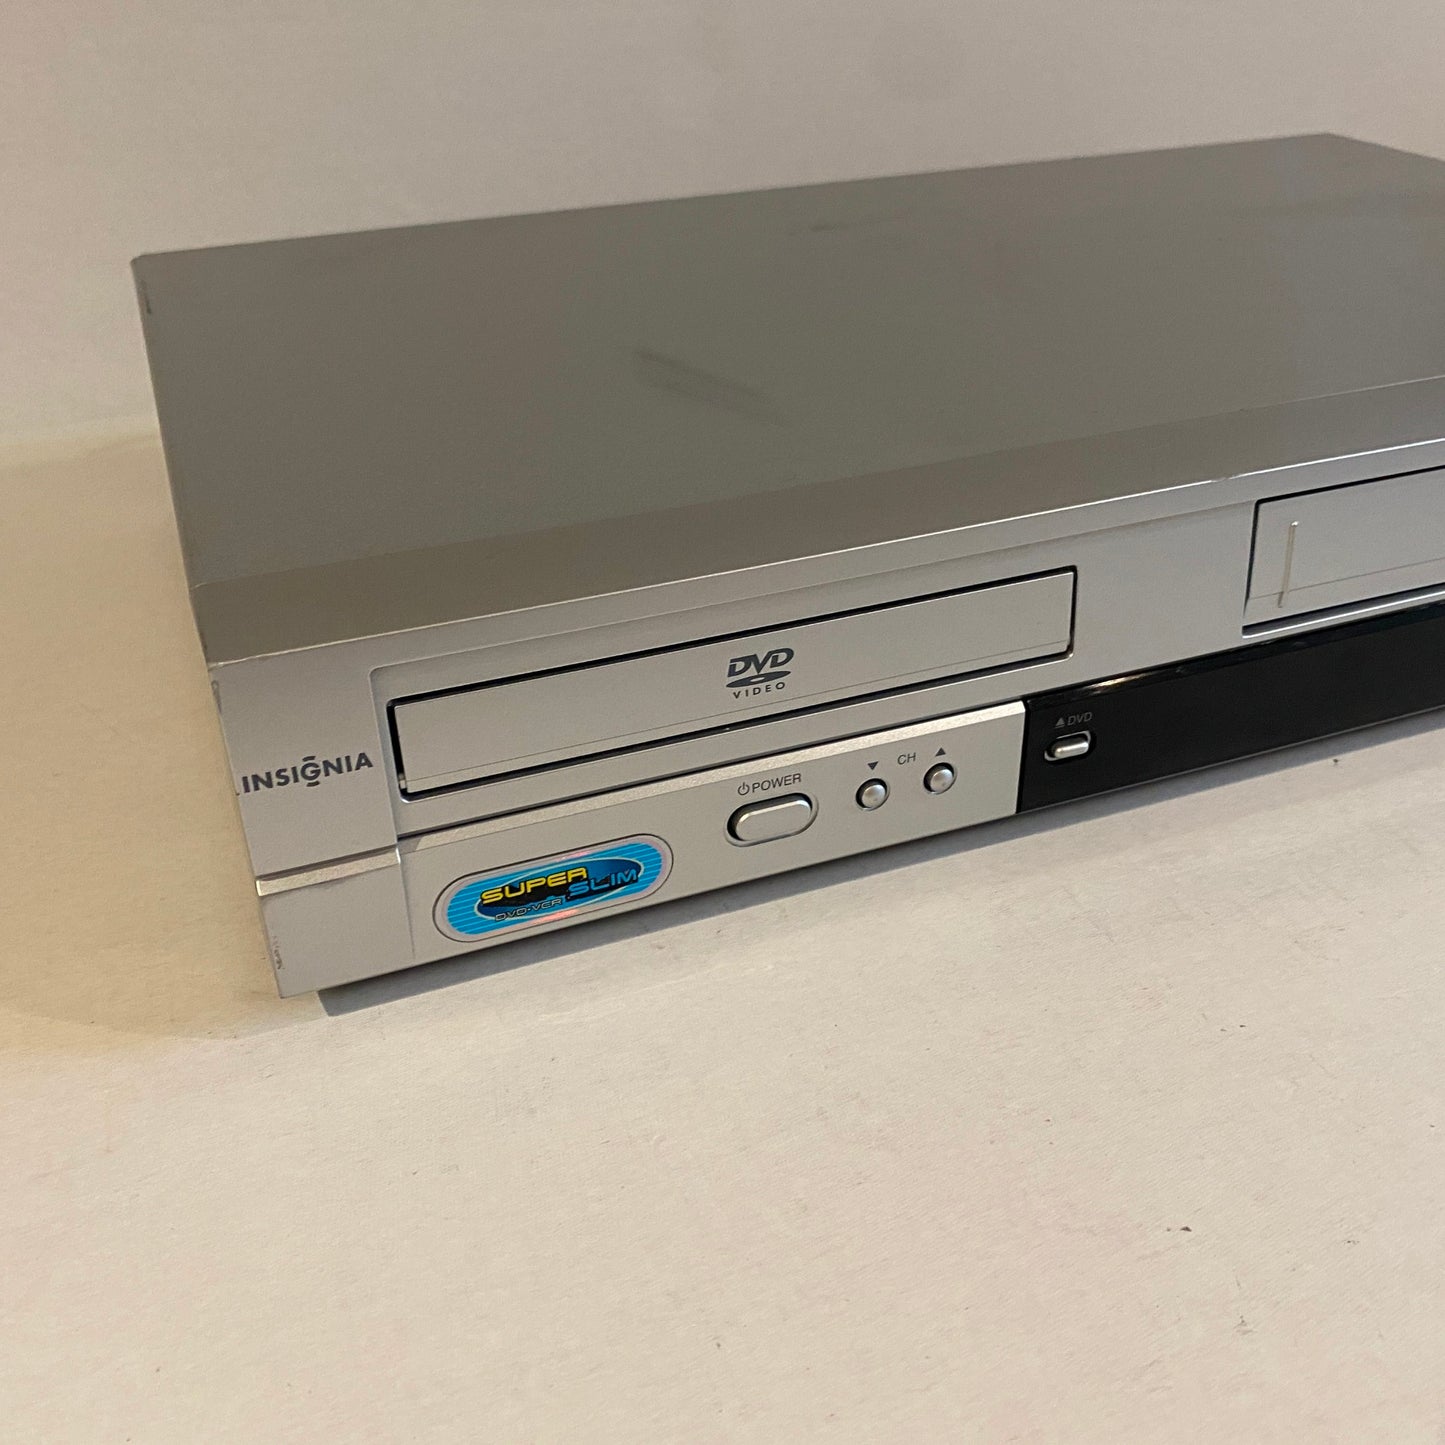 Insignia VHS DVD Combo Player - 3850R-Z352K